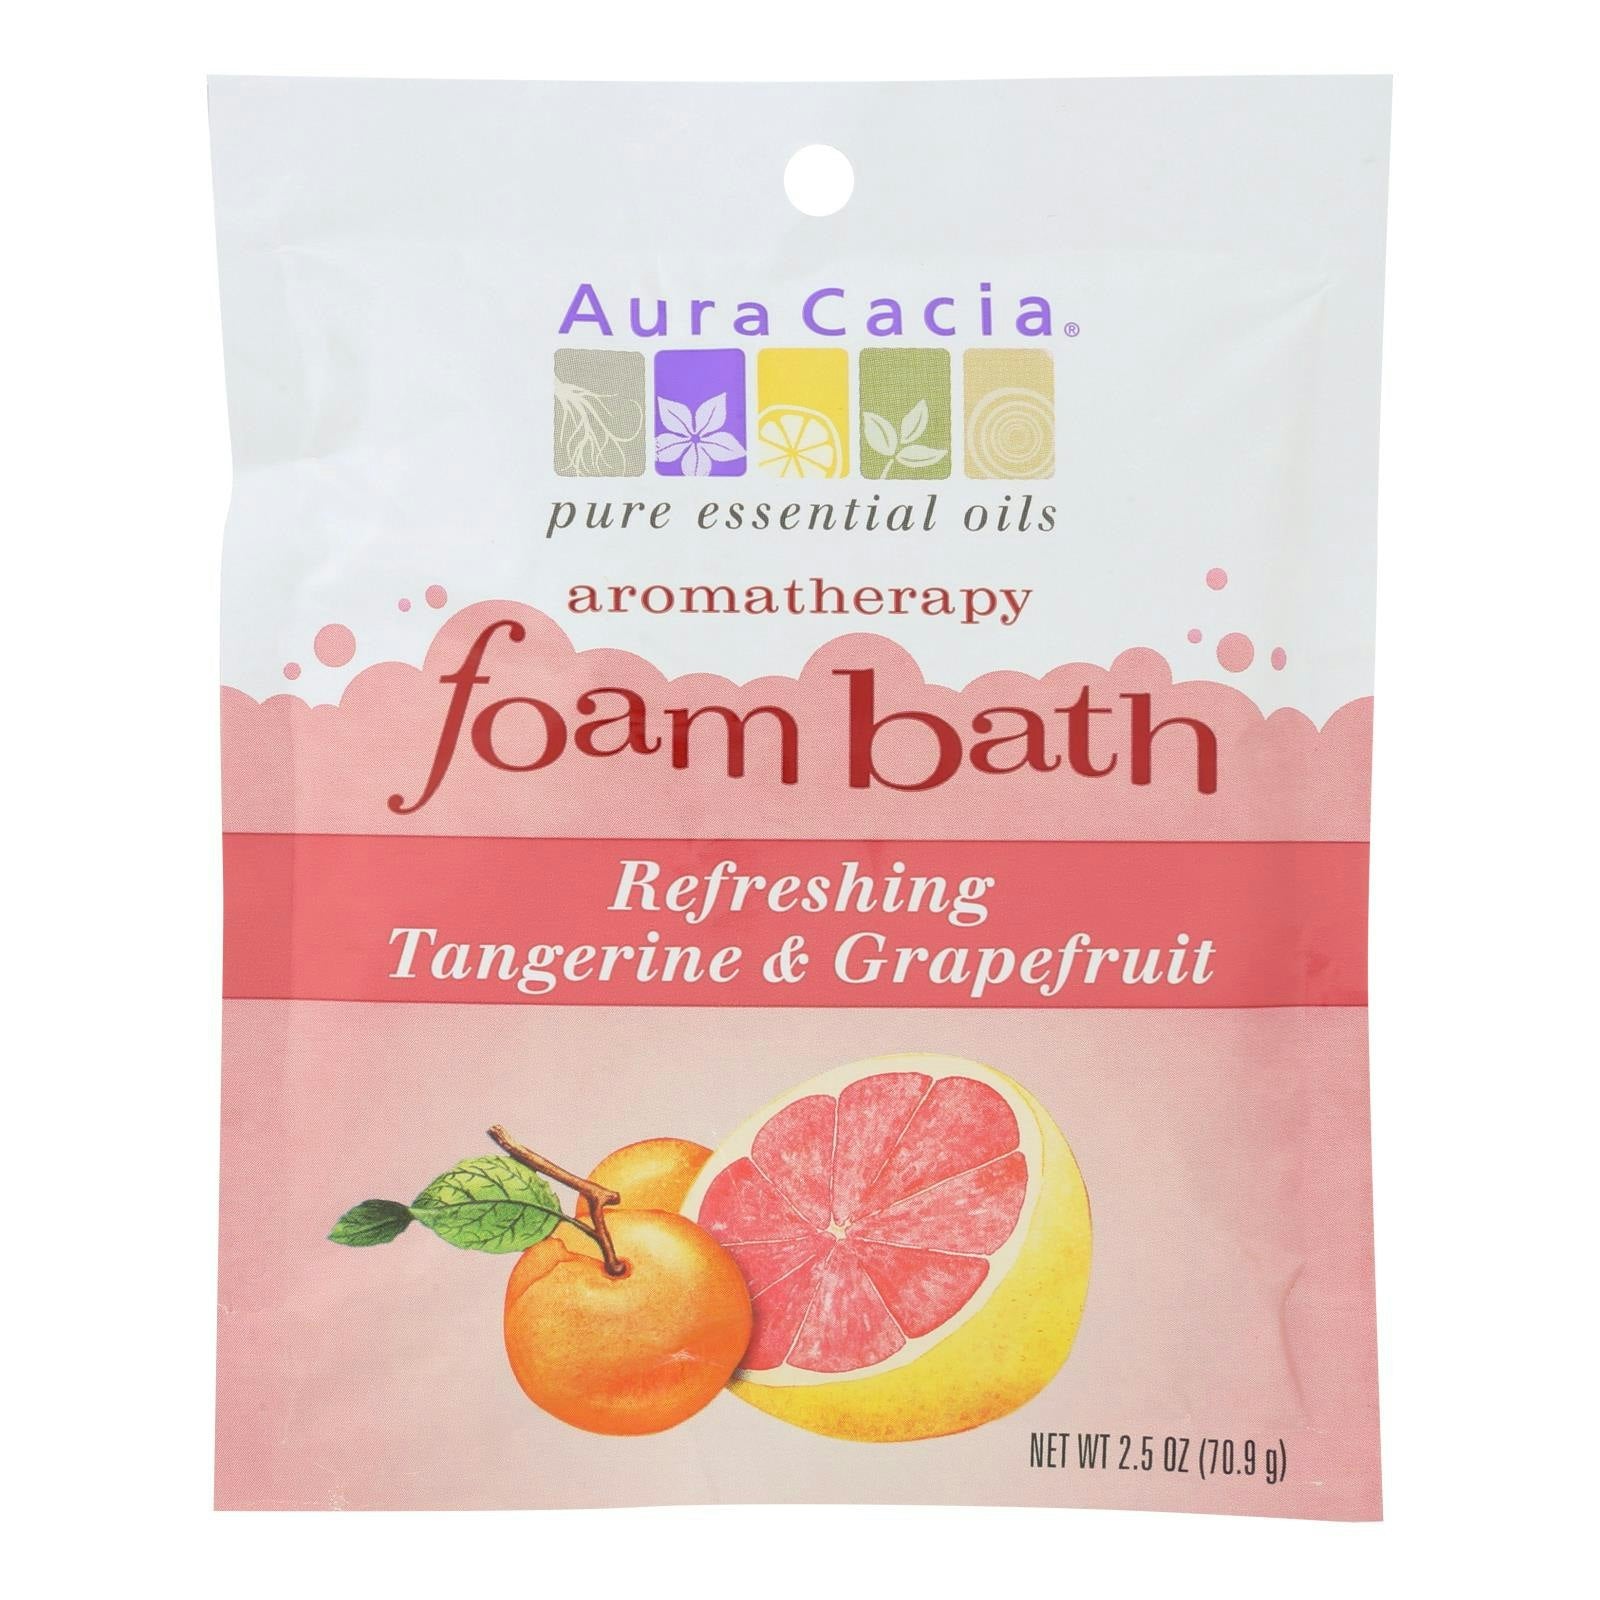 Aura Cacia - Foam Bath Refreshing Tangerine and Grapefruit - 2.5 oz (Pack of 6)